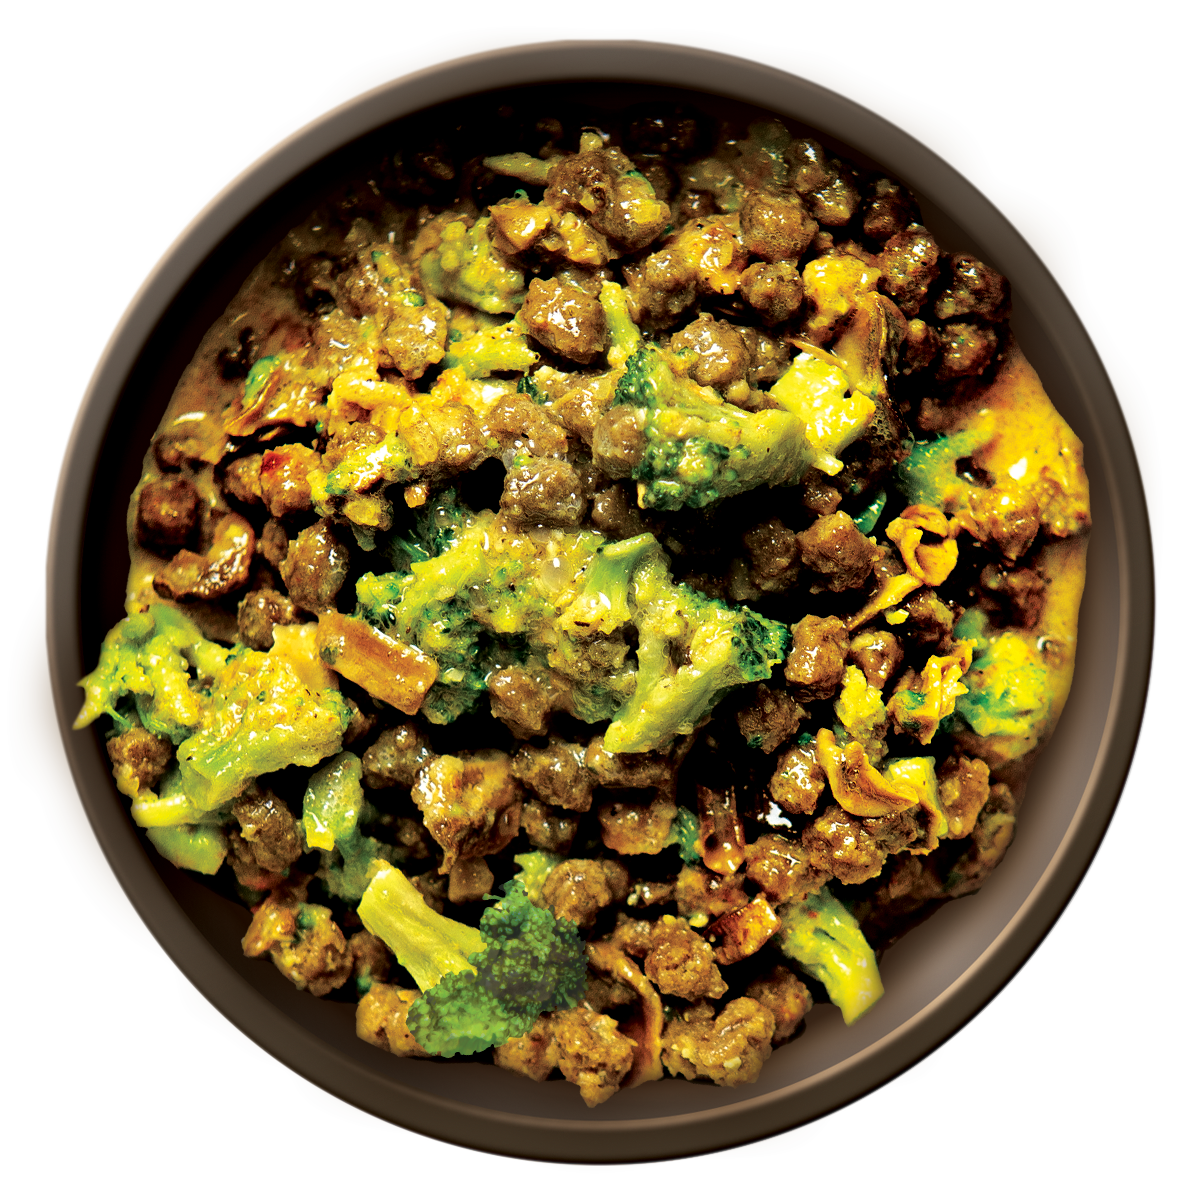 RightOnTrek broccoli beef stroganoff meal in bowl